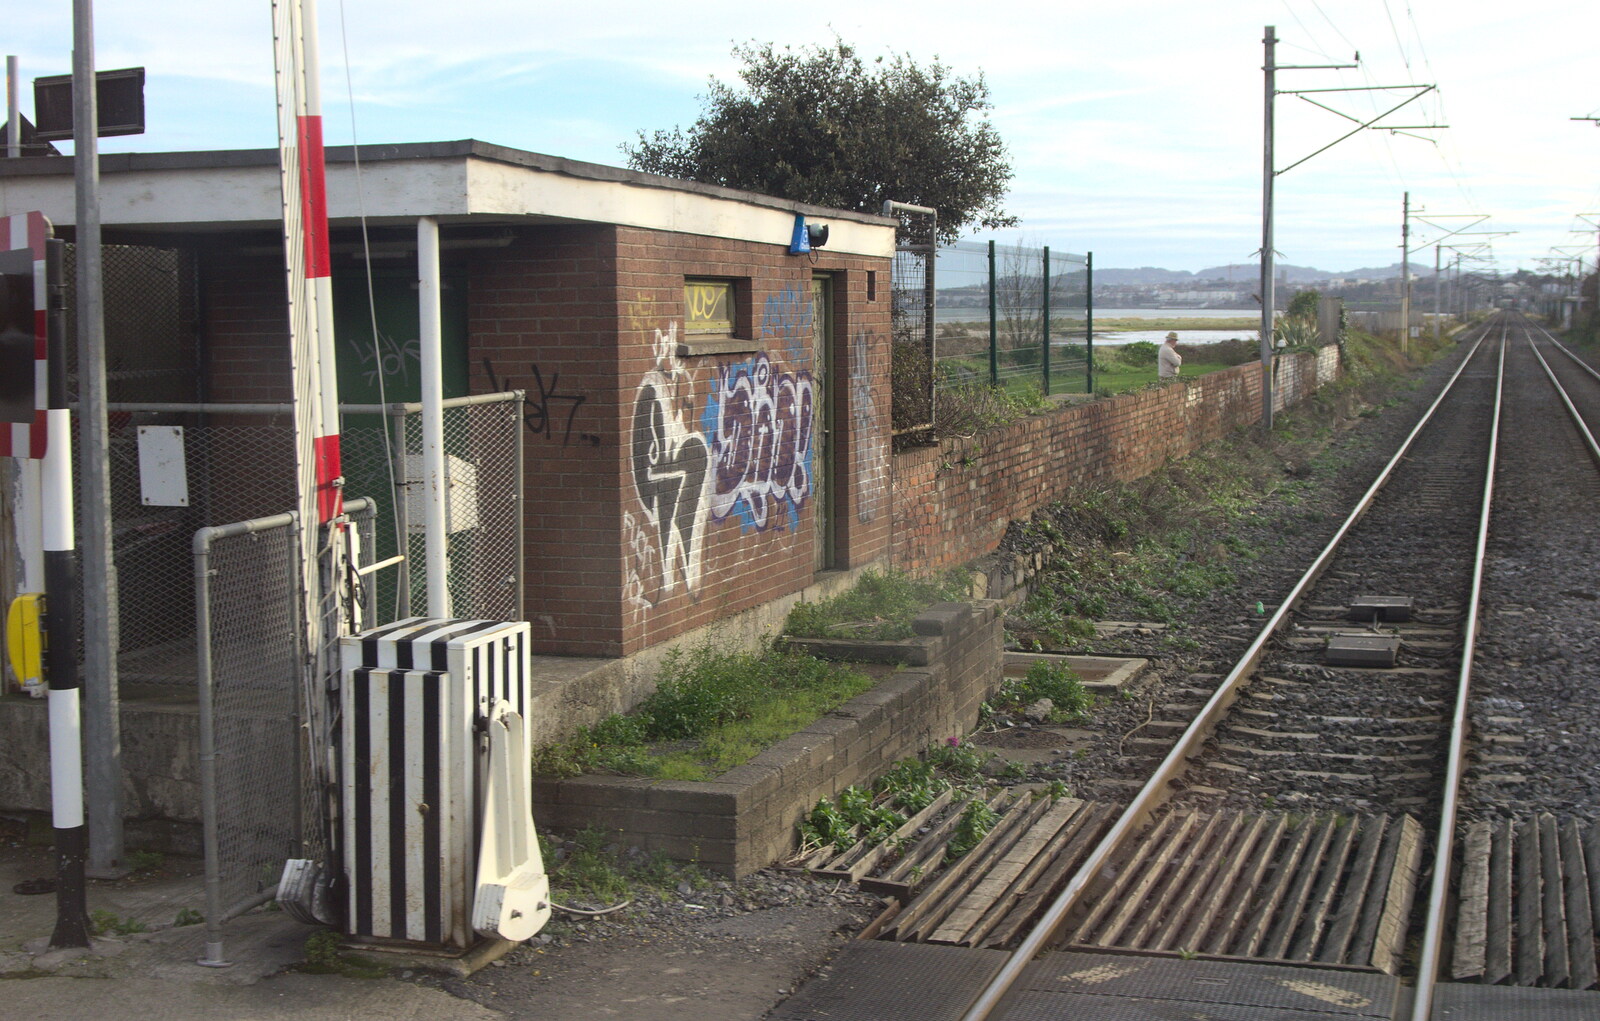 Graffiti'd building at the DART crossing from A Morning in Blackrock, County Dublin, Ireland - 8th January 2012